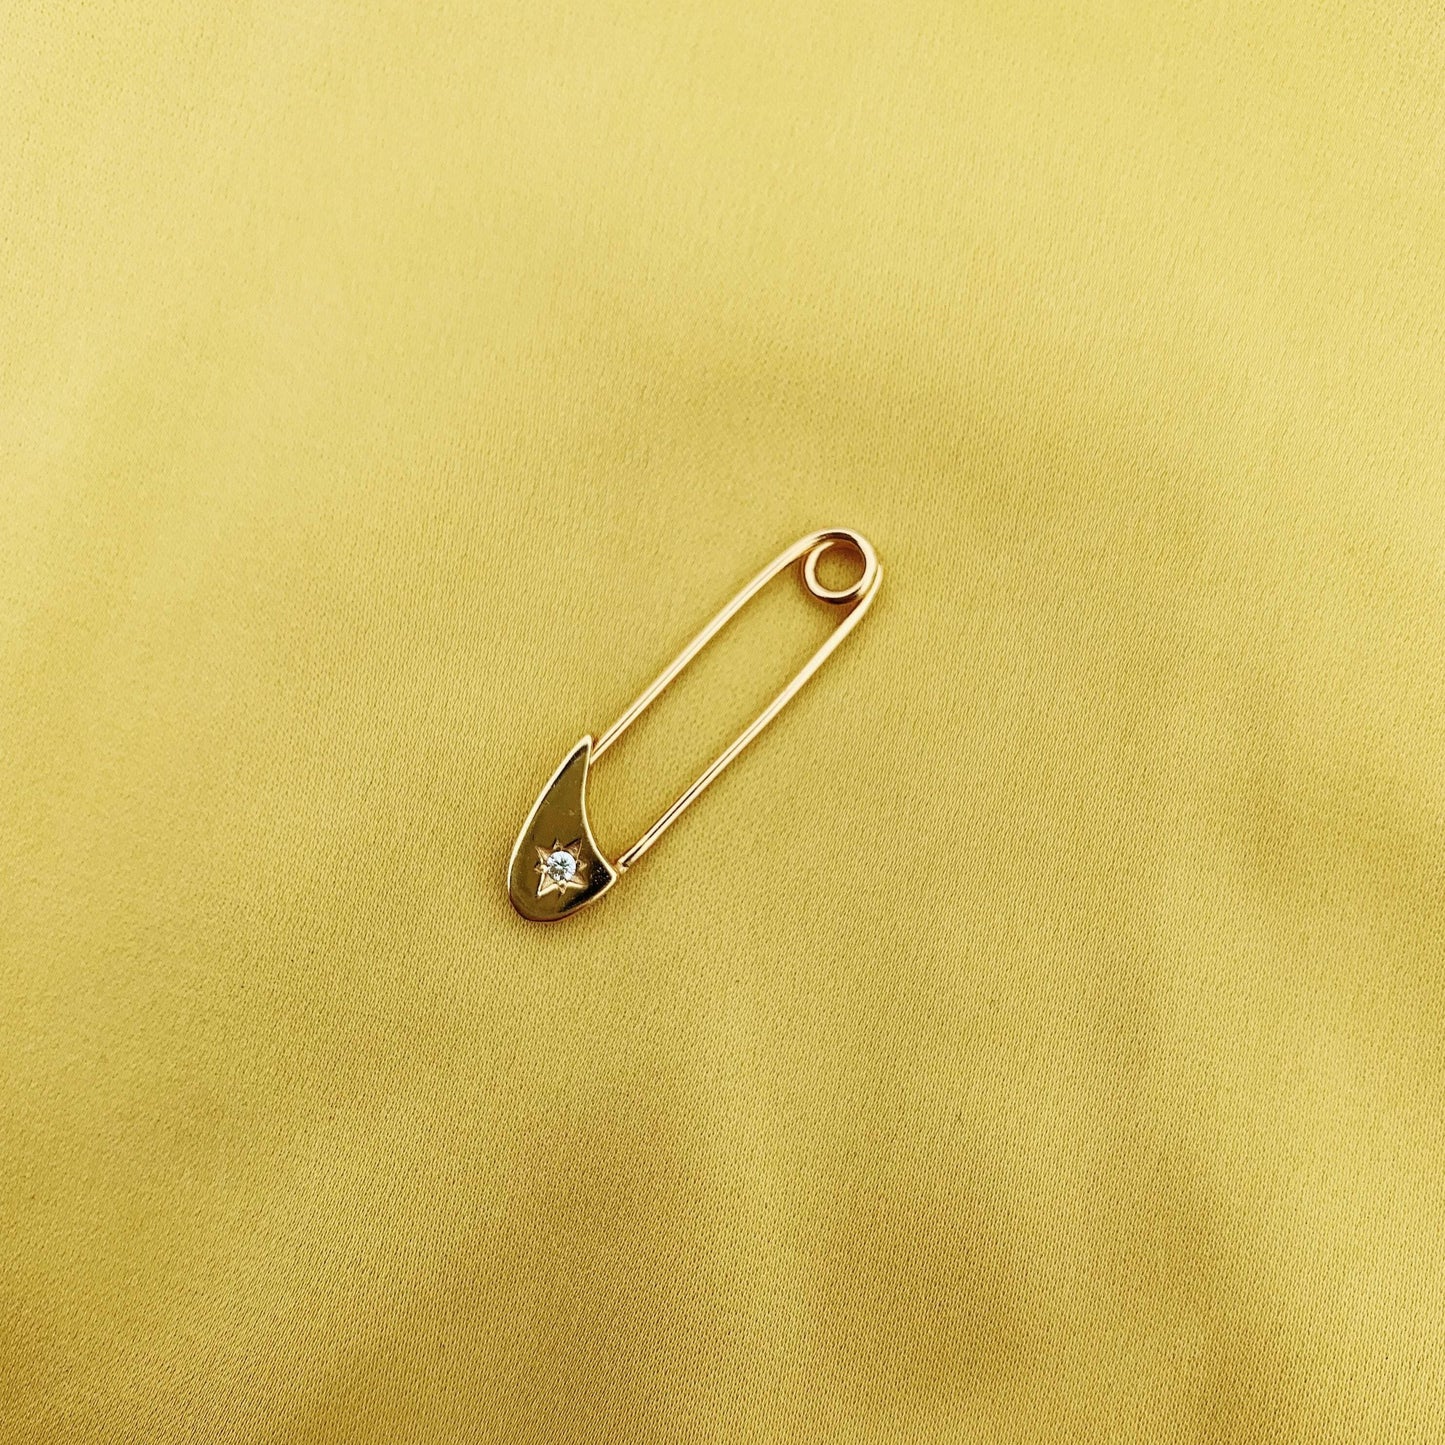 Safety Pin Earring - Lemon Lua Safety Pin Earring Lemon Lua Lemon Lua Safety Pin Earring Safety Pin Earring